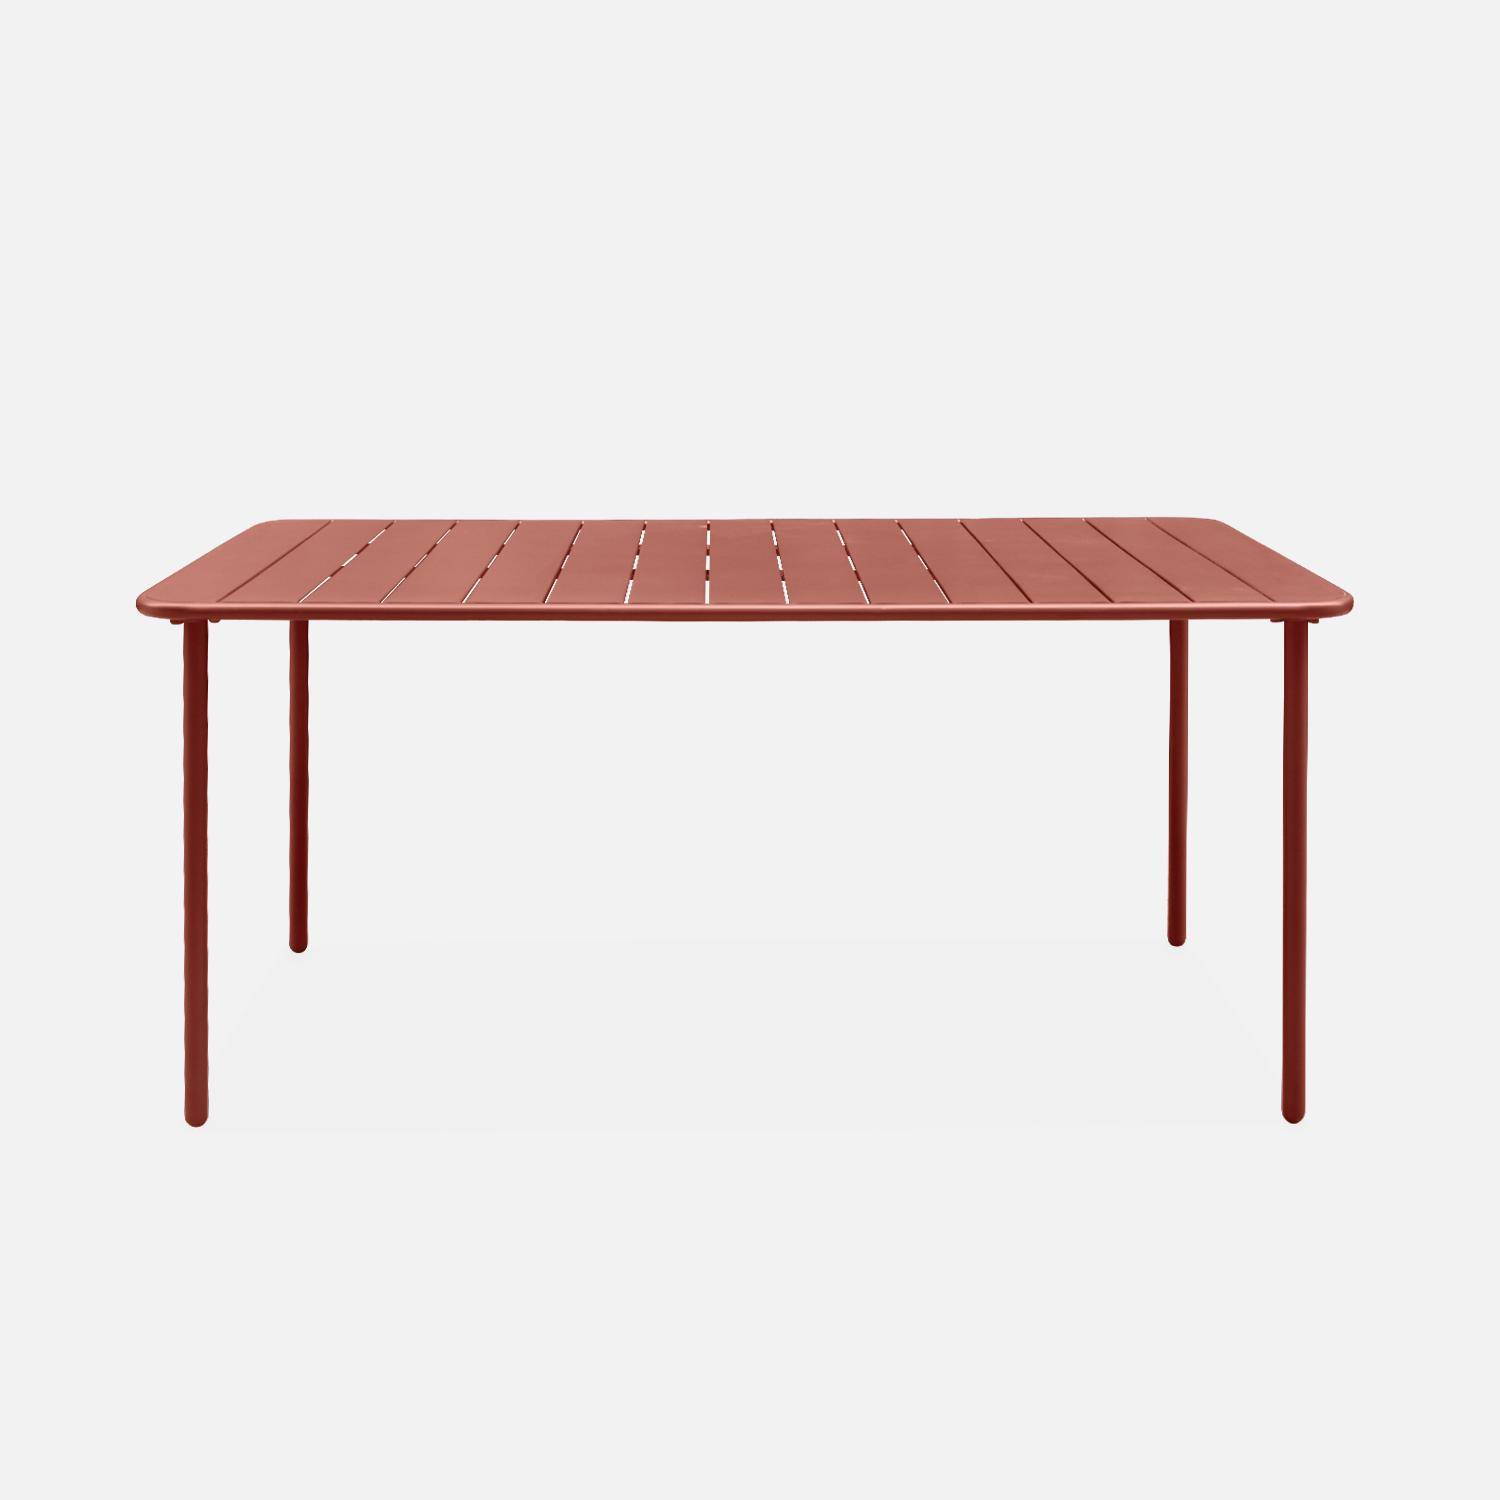 6-8 Seater metal garden table, 160x90xH72.5cm, Terracotta Photo5